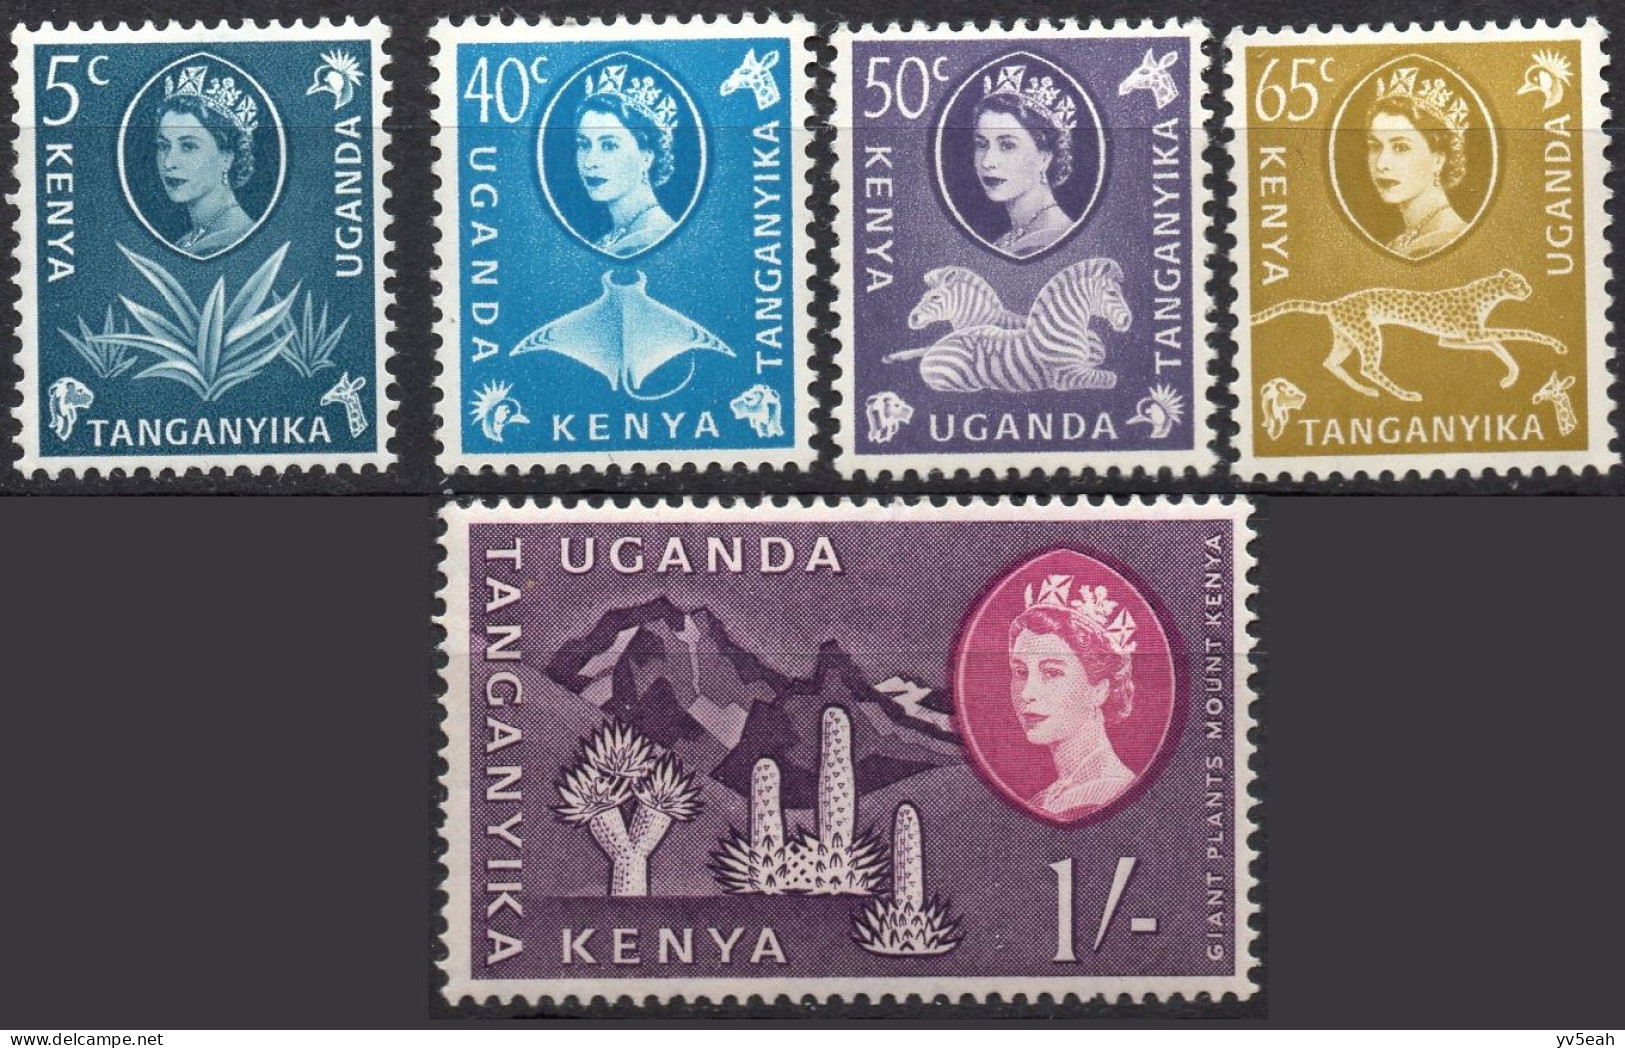 KENYA UGANDA & TANZANIA/1960/MNH/SC#120, 126-9/ QUEEN ELIZABETH II/ QEII / PARTIAL SET - Kenya, Uganda & Tanzania